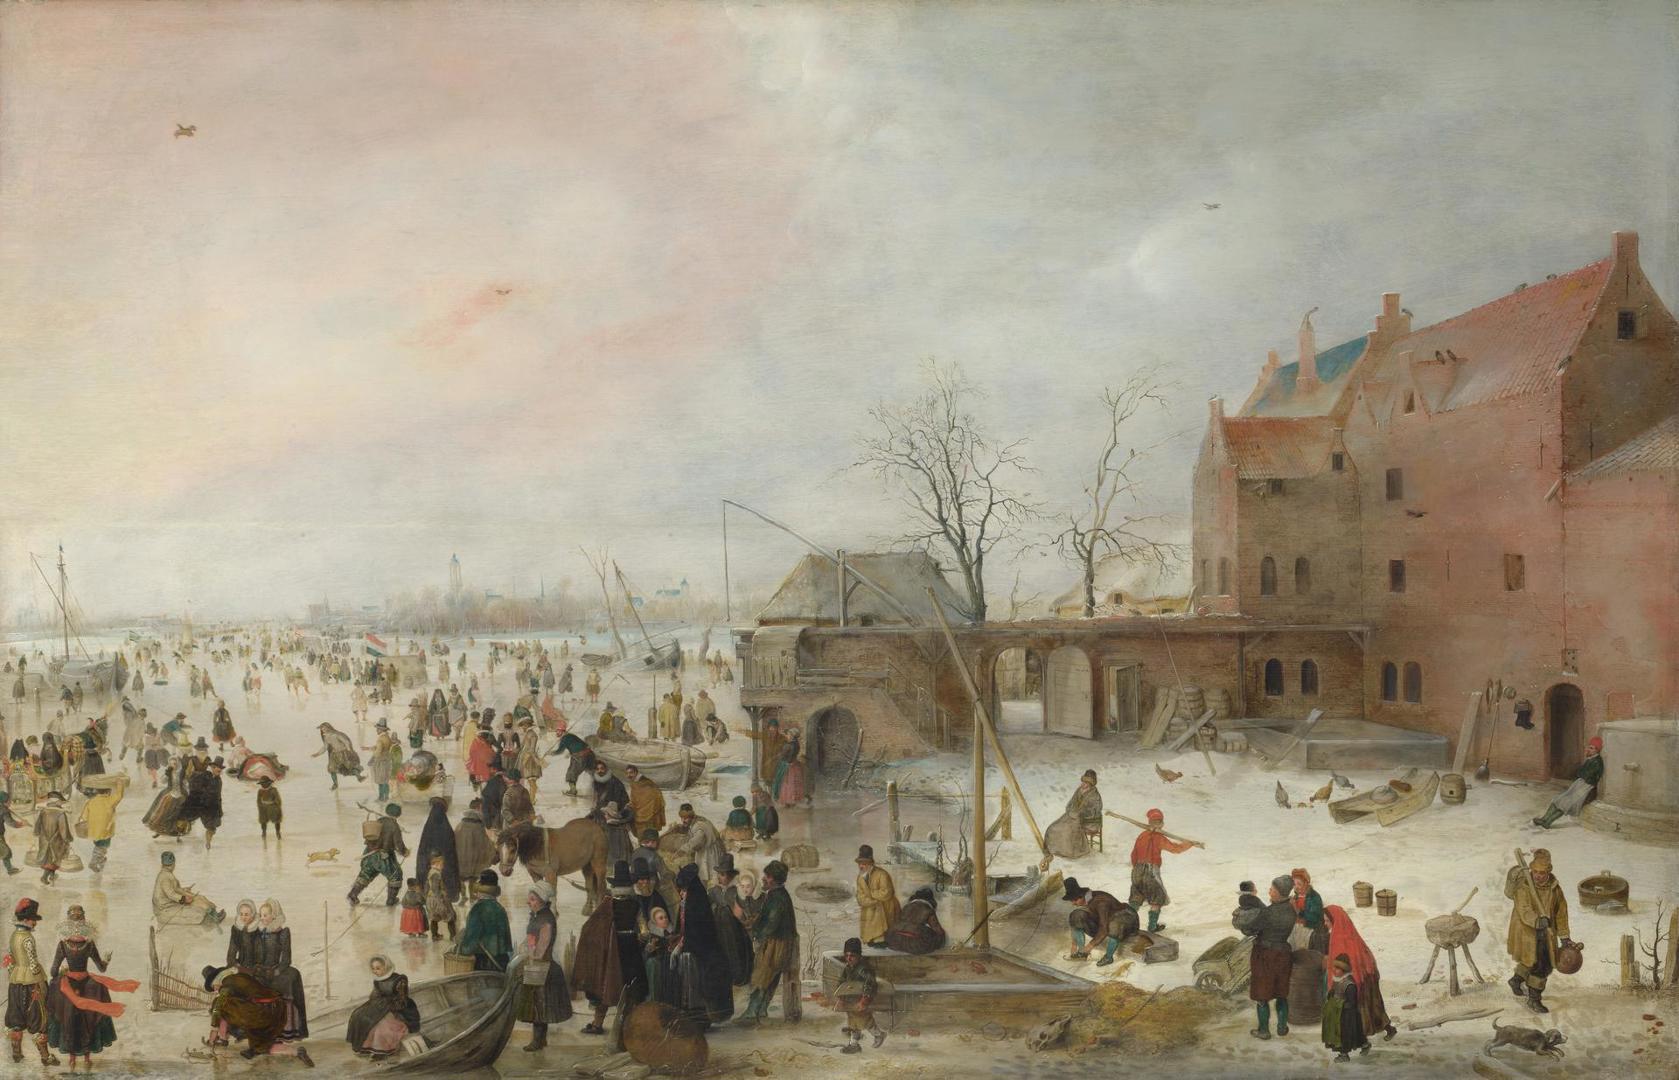 A Scene on the Ice near a Town by Hendrick Avercamp